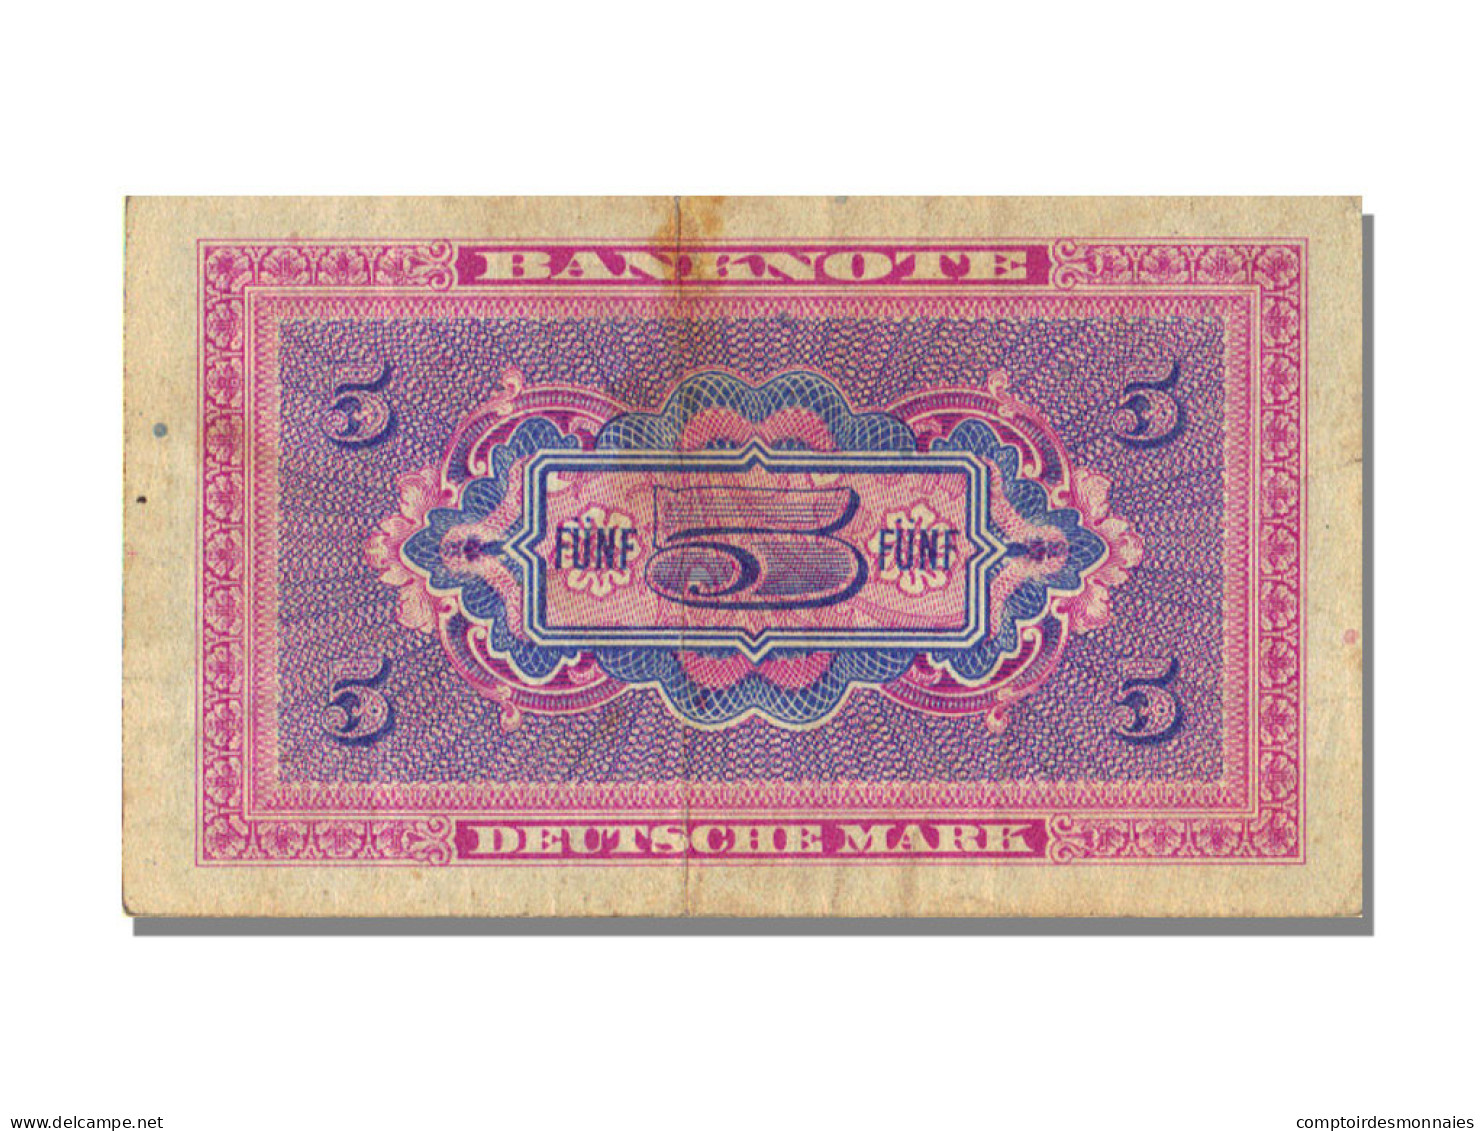 Billet, République Fédérale Allemande, 5 Deutsche Mark, 1948, TTB+ - 5 Deutsche Mark